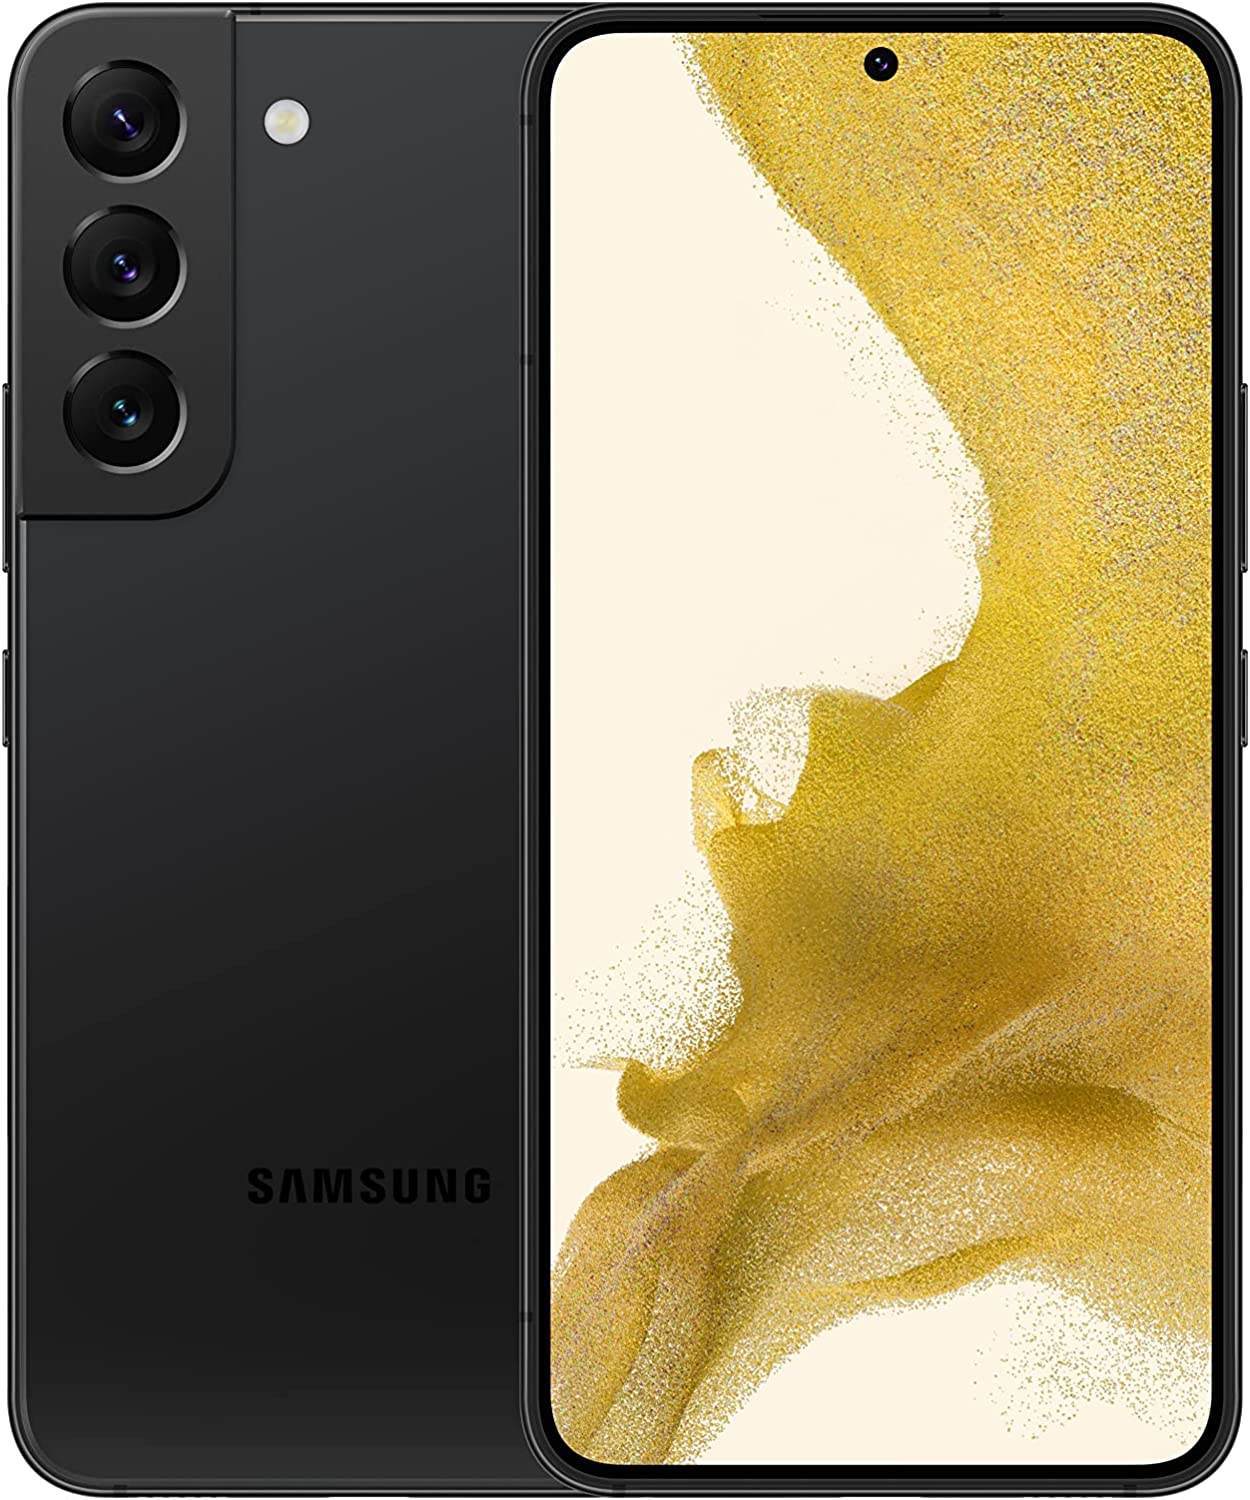 New SAMSUNG Galaxy S22 Cell Phone, Factory Unlocked Android Smartphone, 128GB, US Version, Phantom Black $550.57